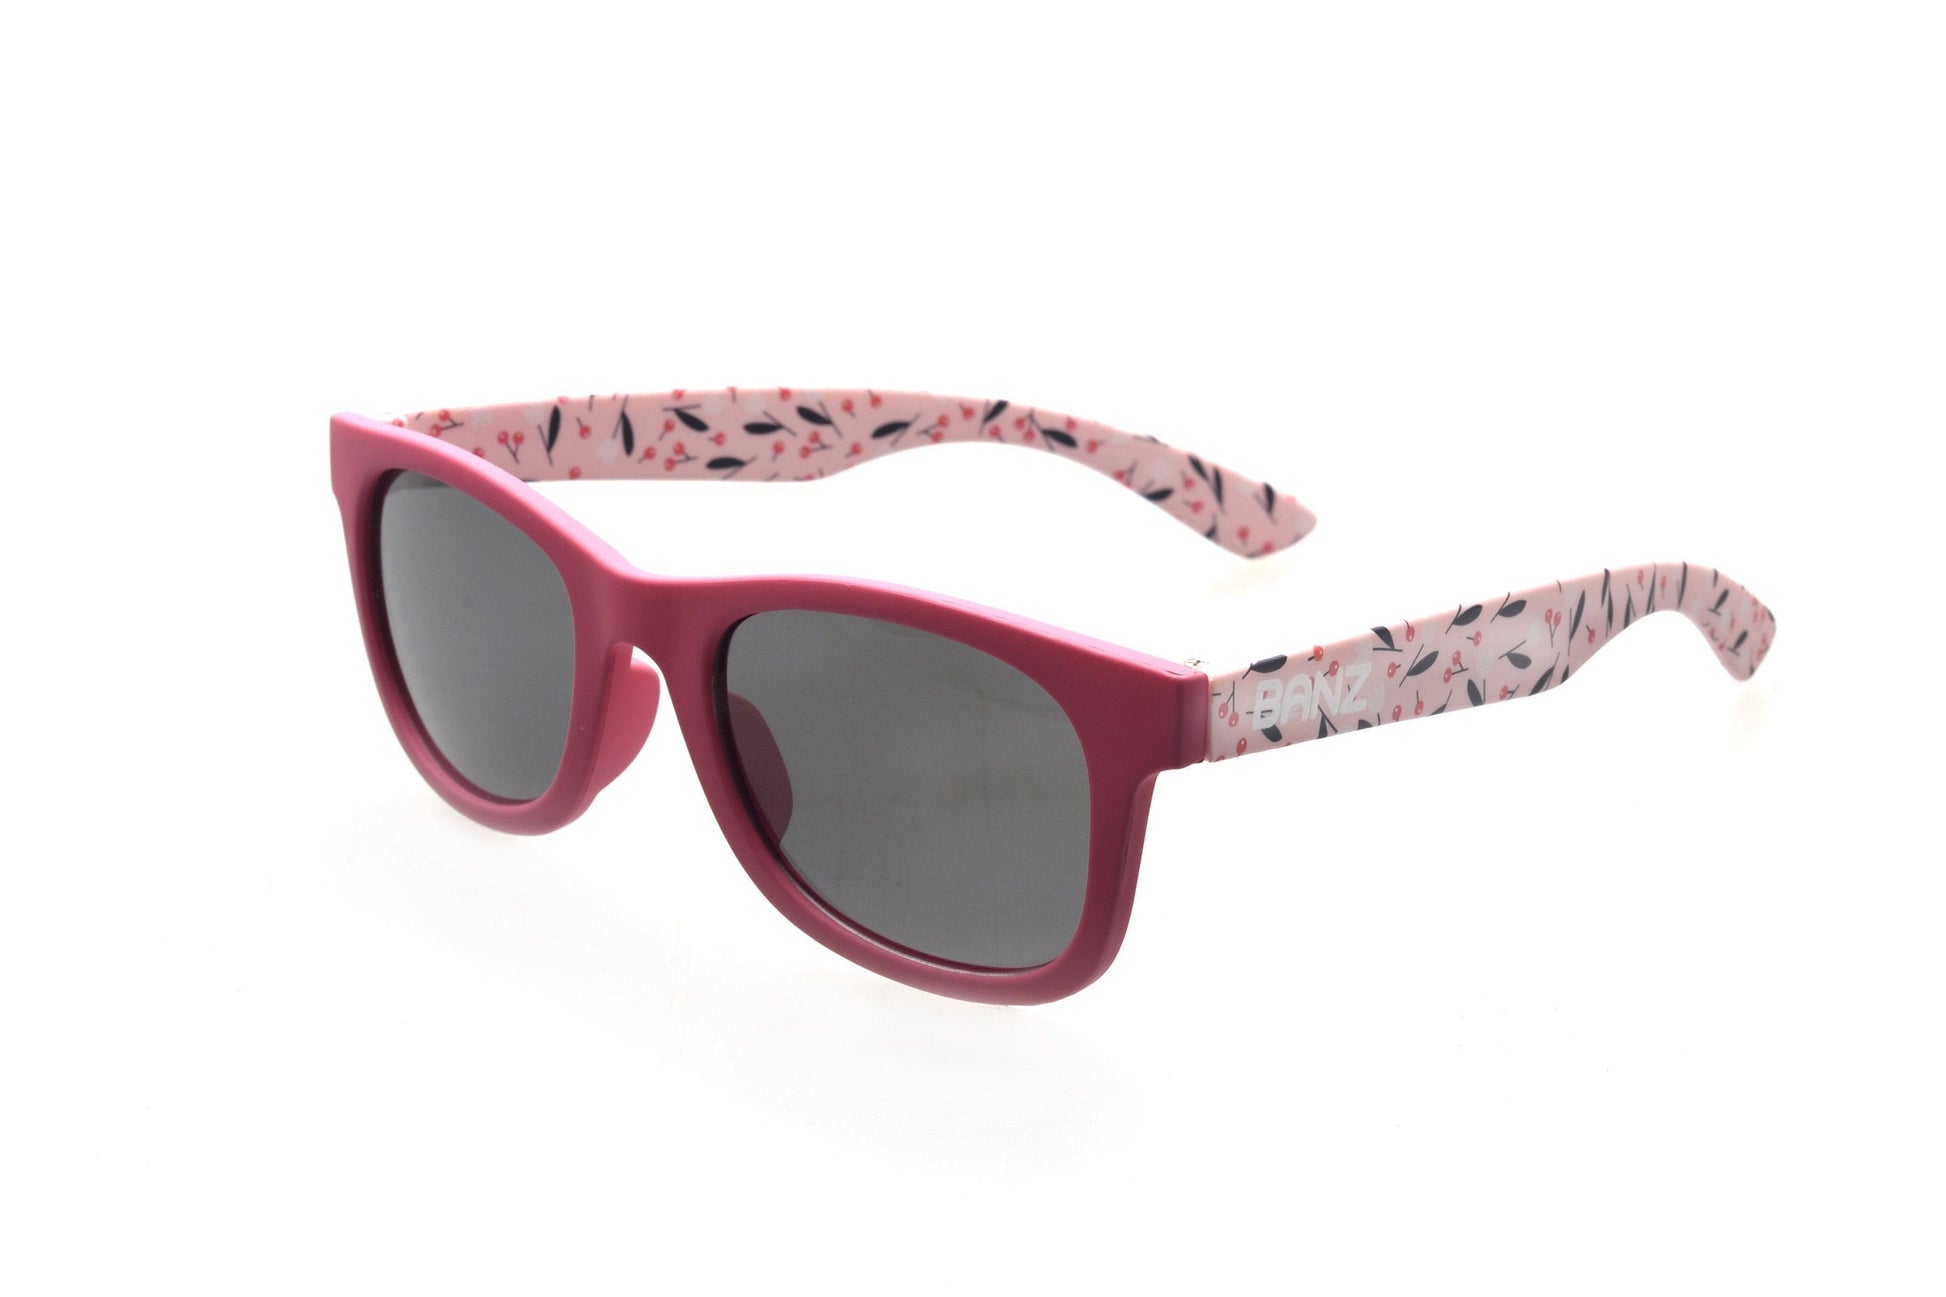 BANZ Sunglasses NEW! Baby Beachcomber Sunglasses Petite Cherry Floral